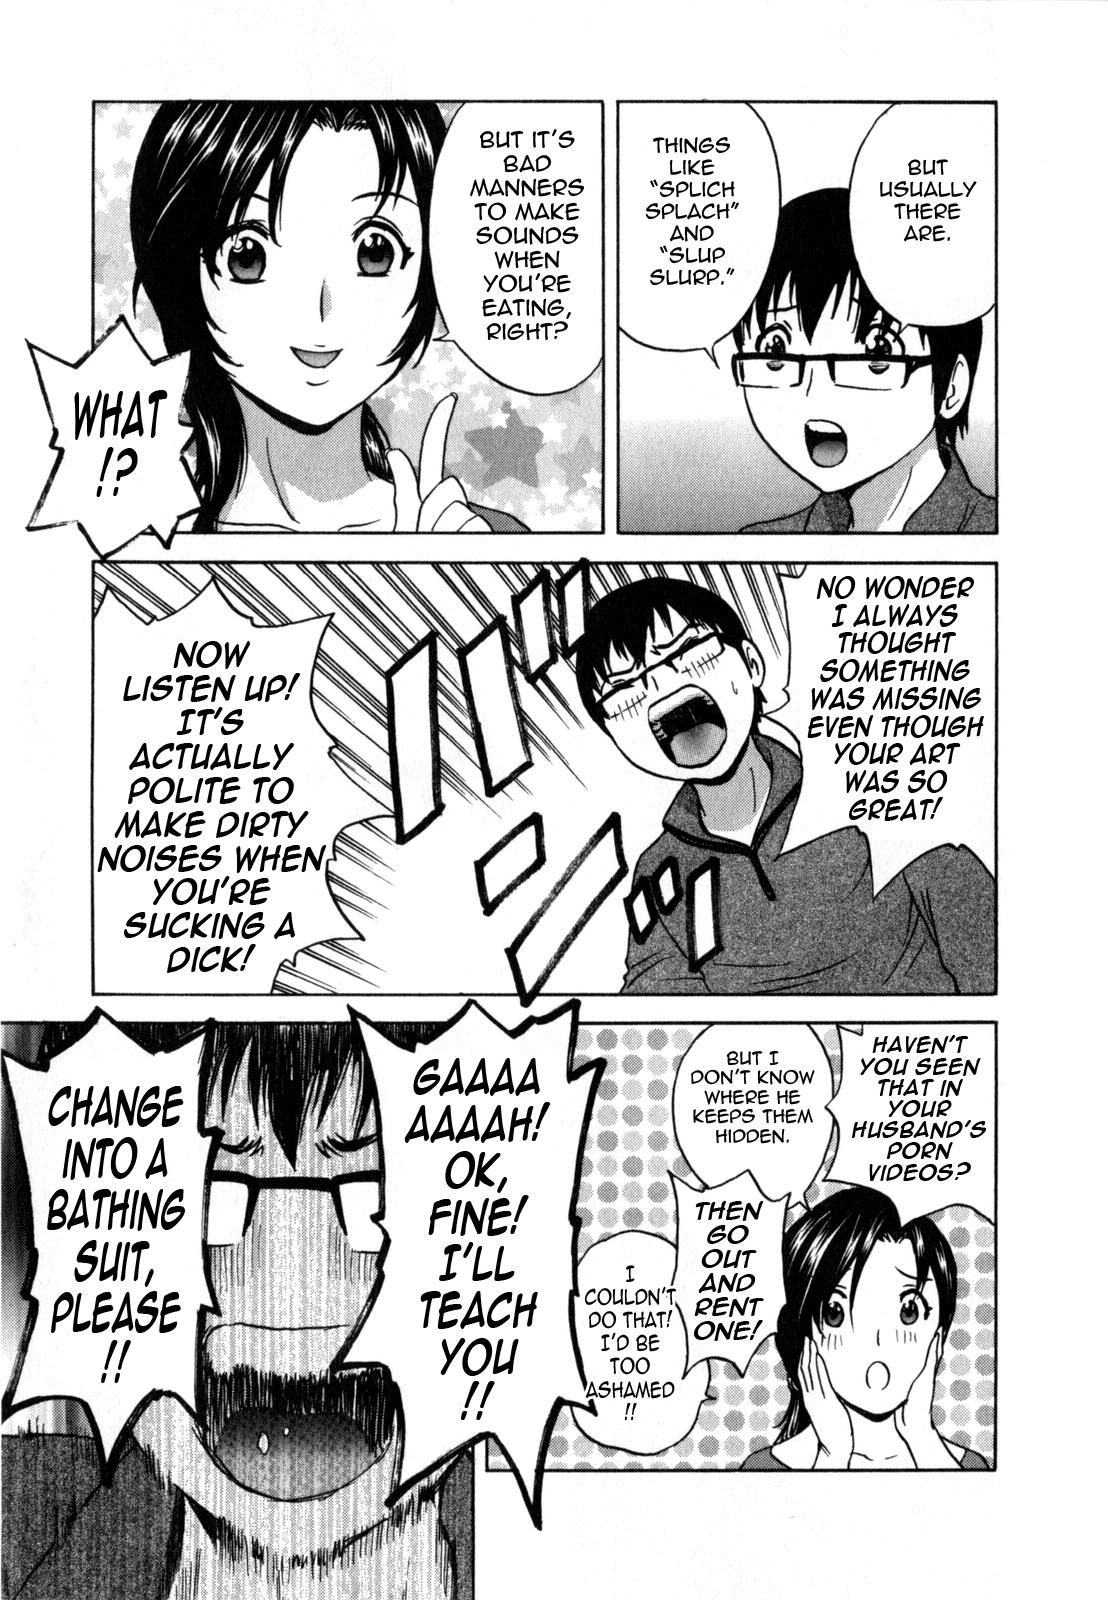 [Hidemaru] Life with Married Women Just Like a Manga 1 - Ch. 1-4 [English] {Tadanohito} 15